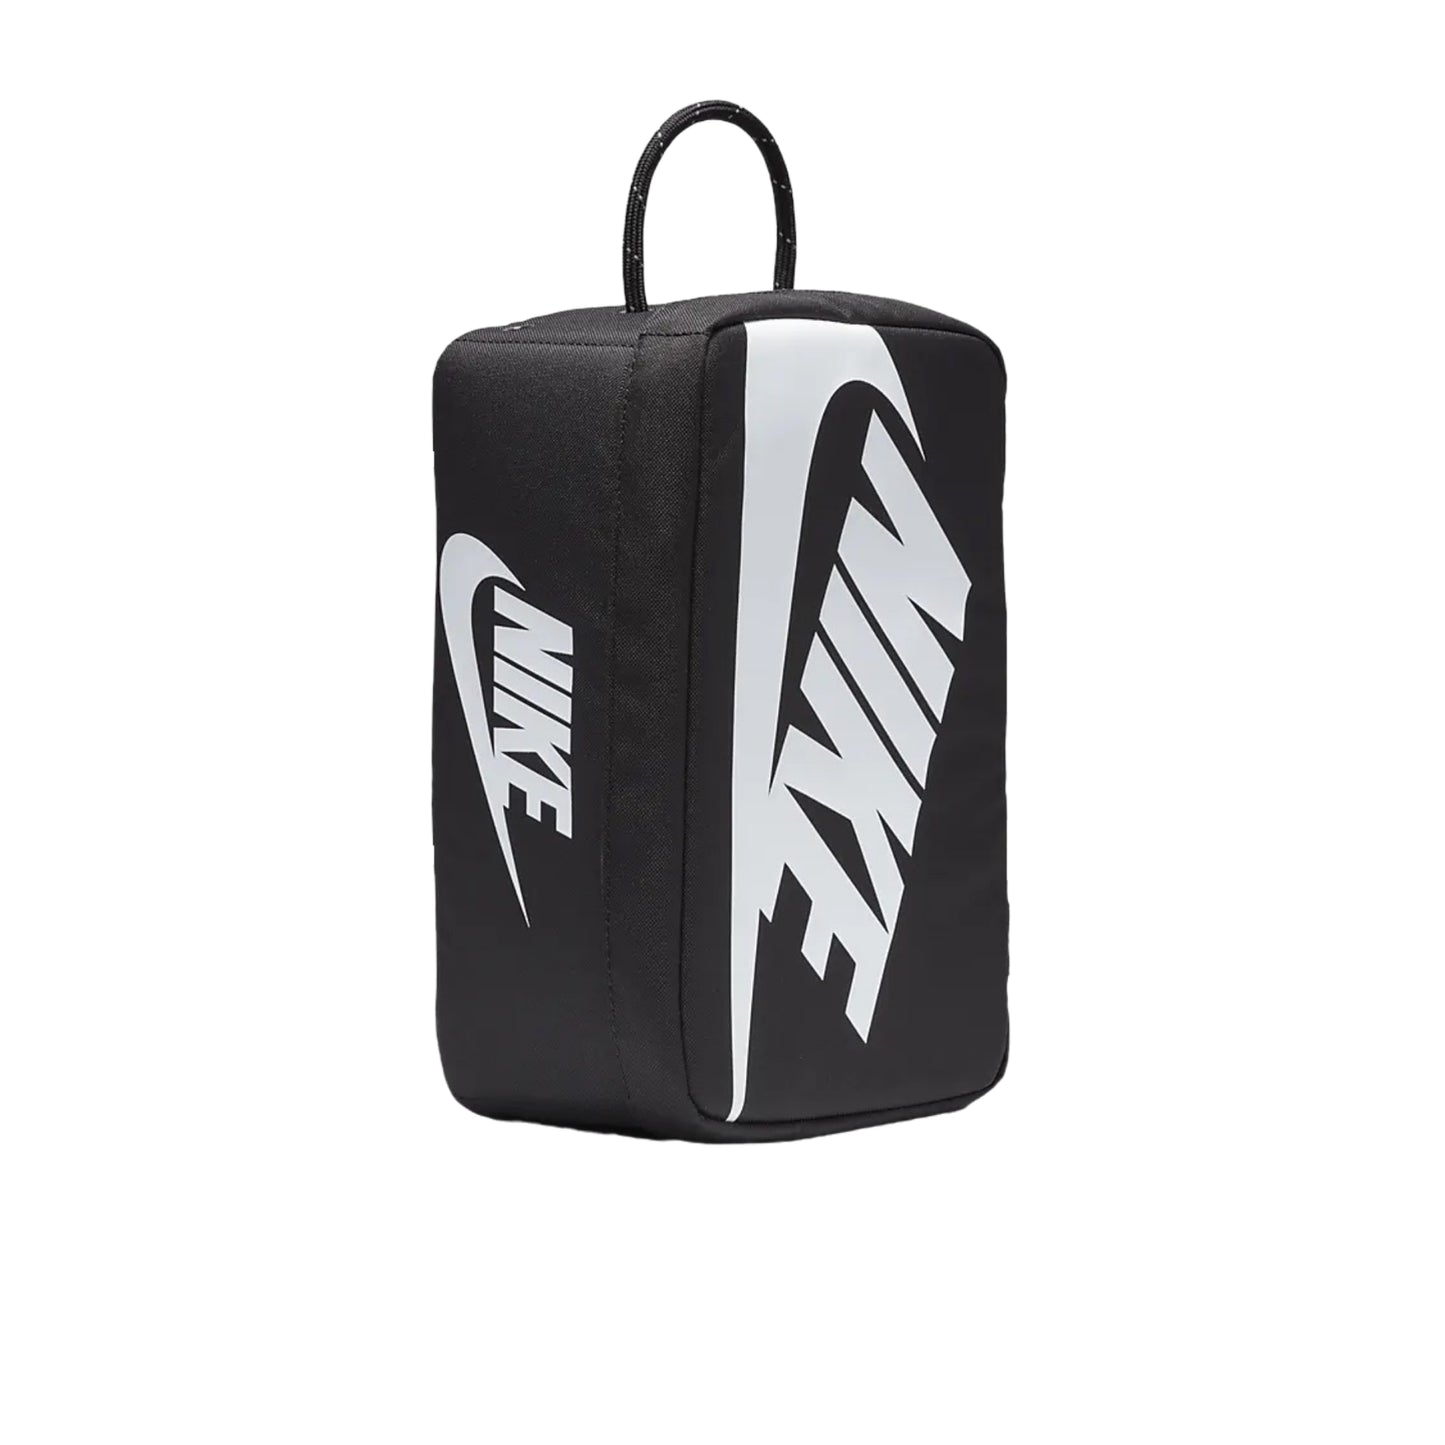 Nike Shoe Box Bag - Black